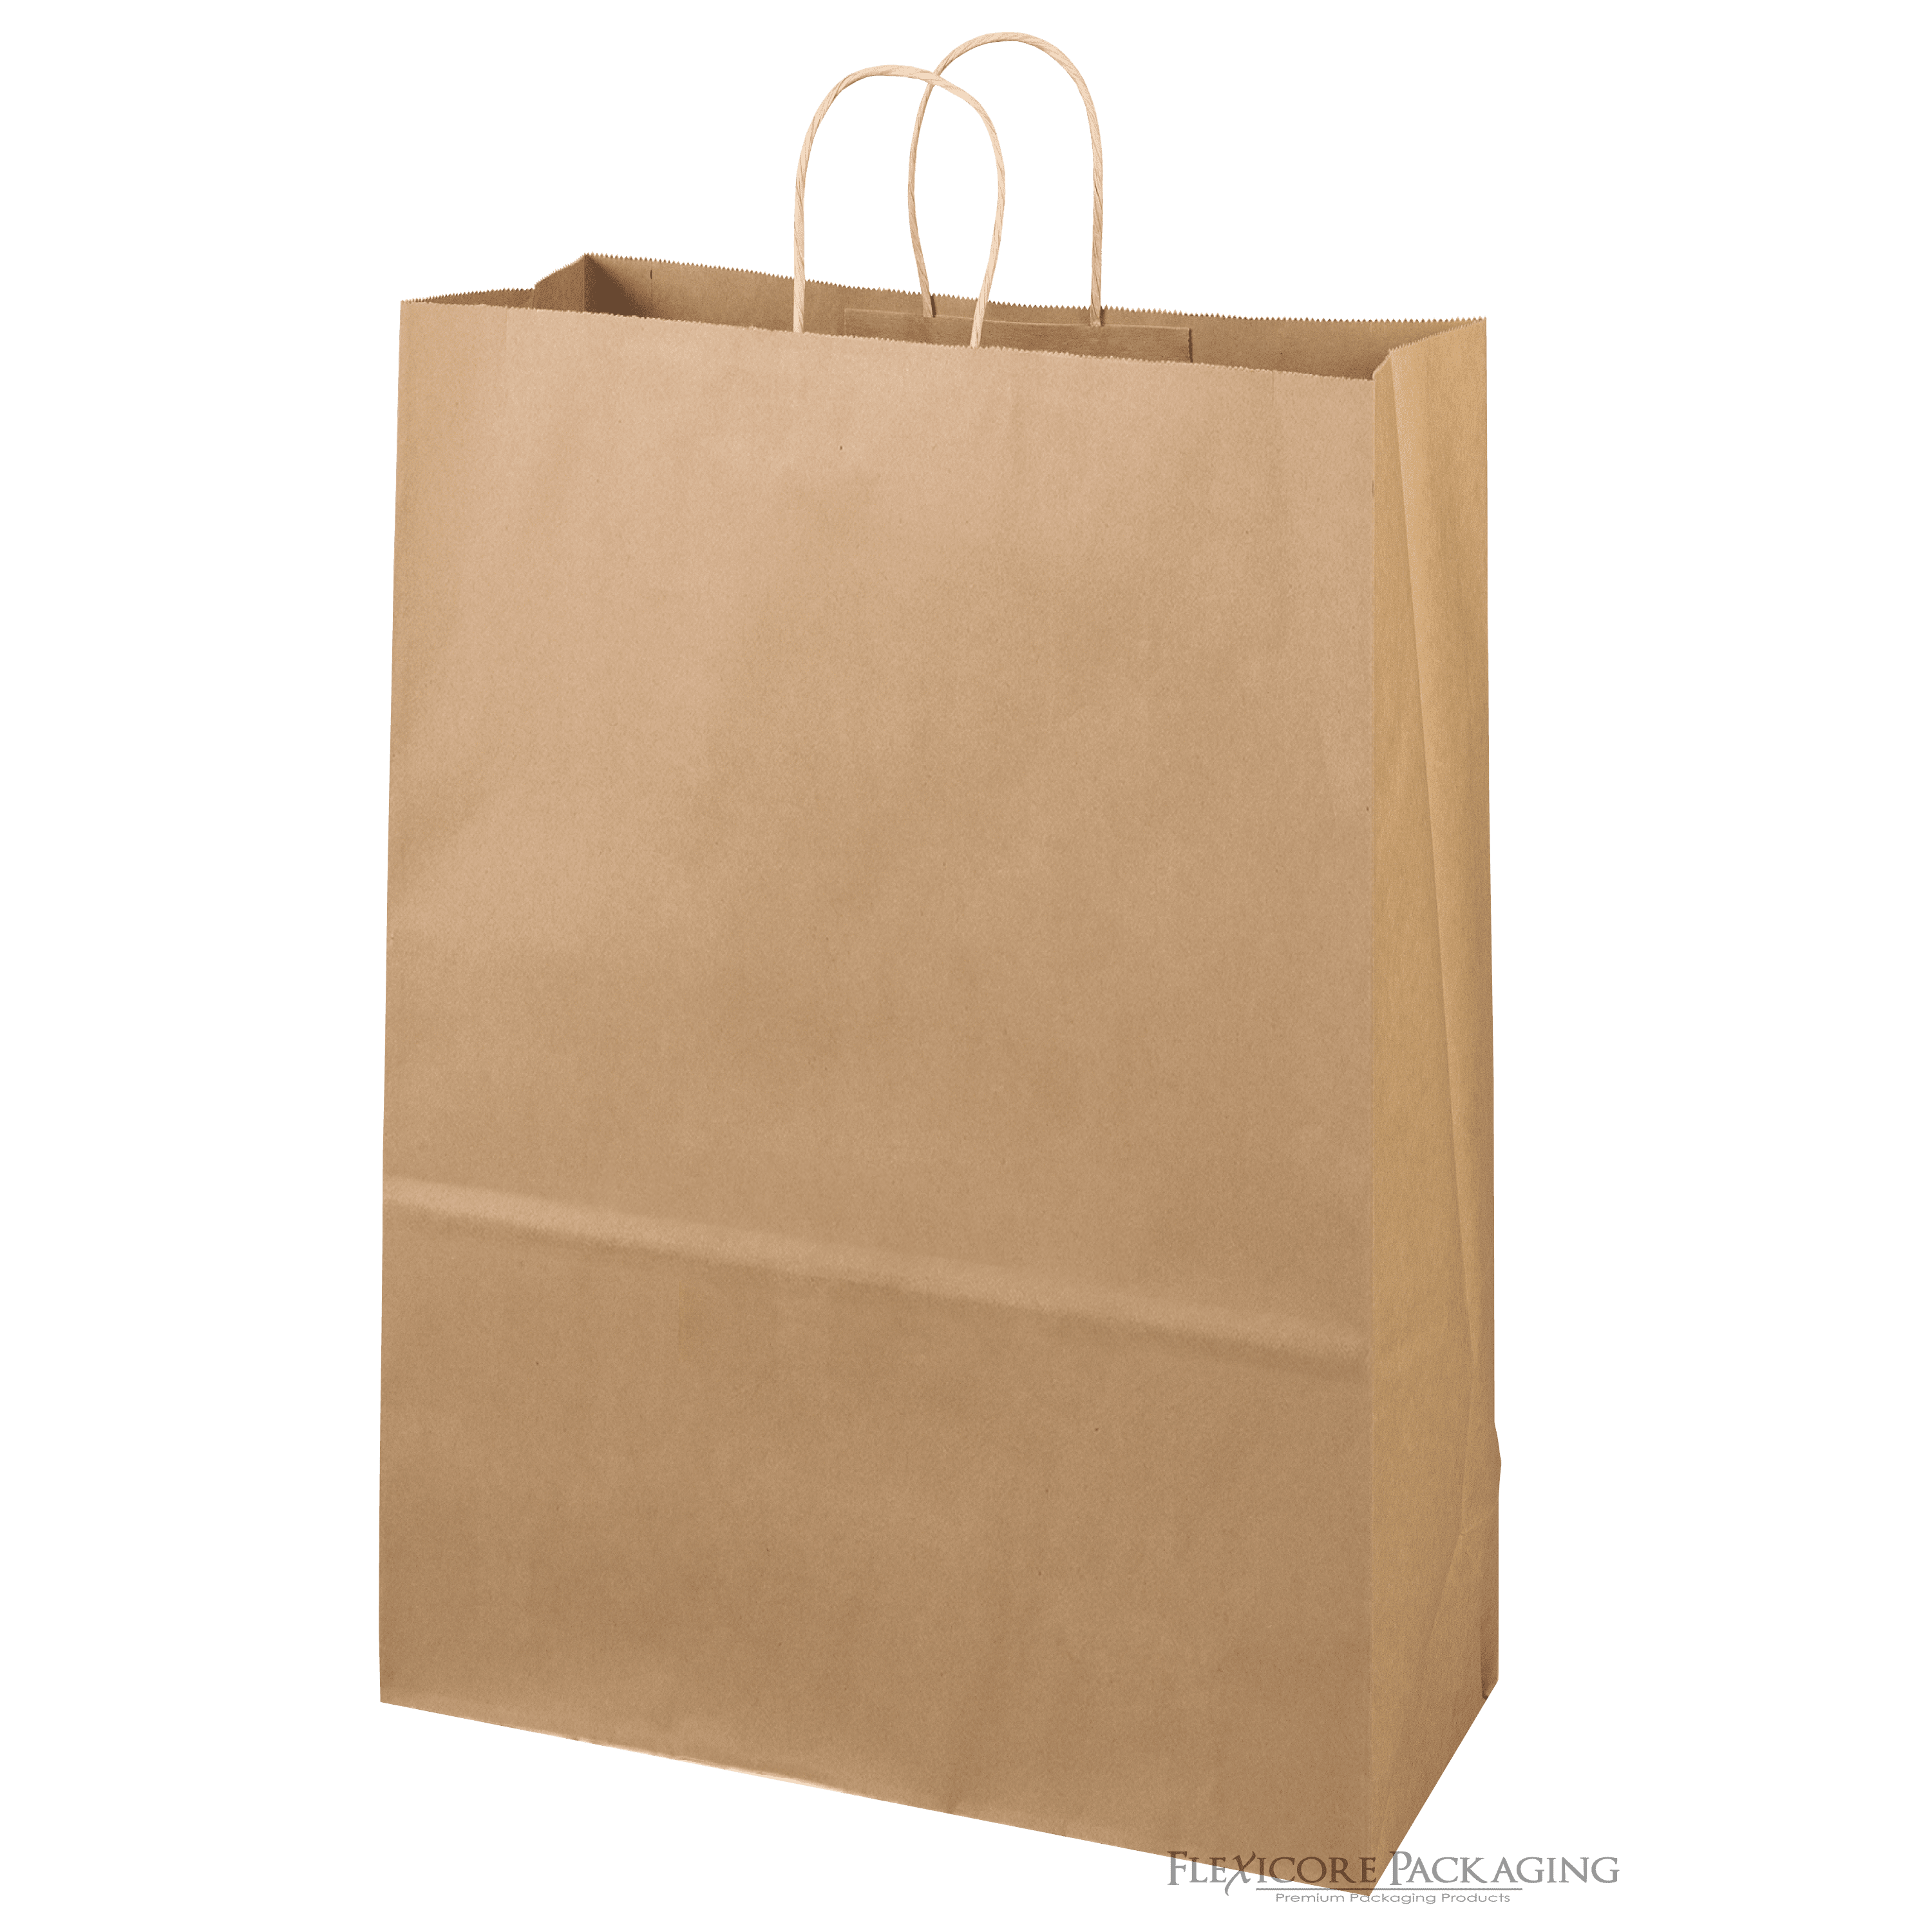 Stock Your Home 52 Lb Kraft Brown Paper Bags (100 Count) - Kraft Brown